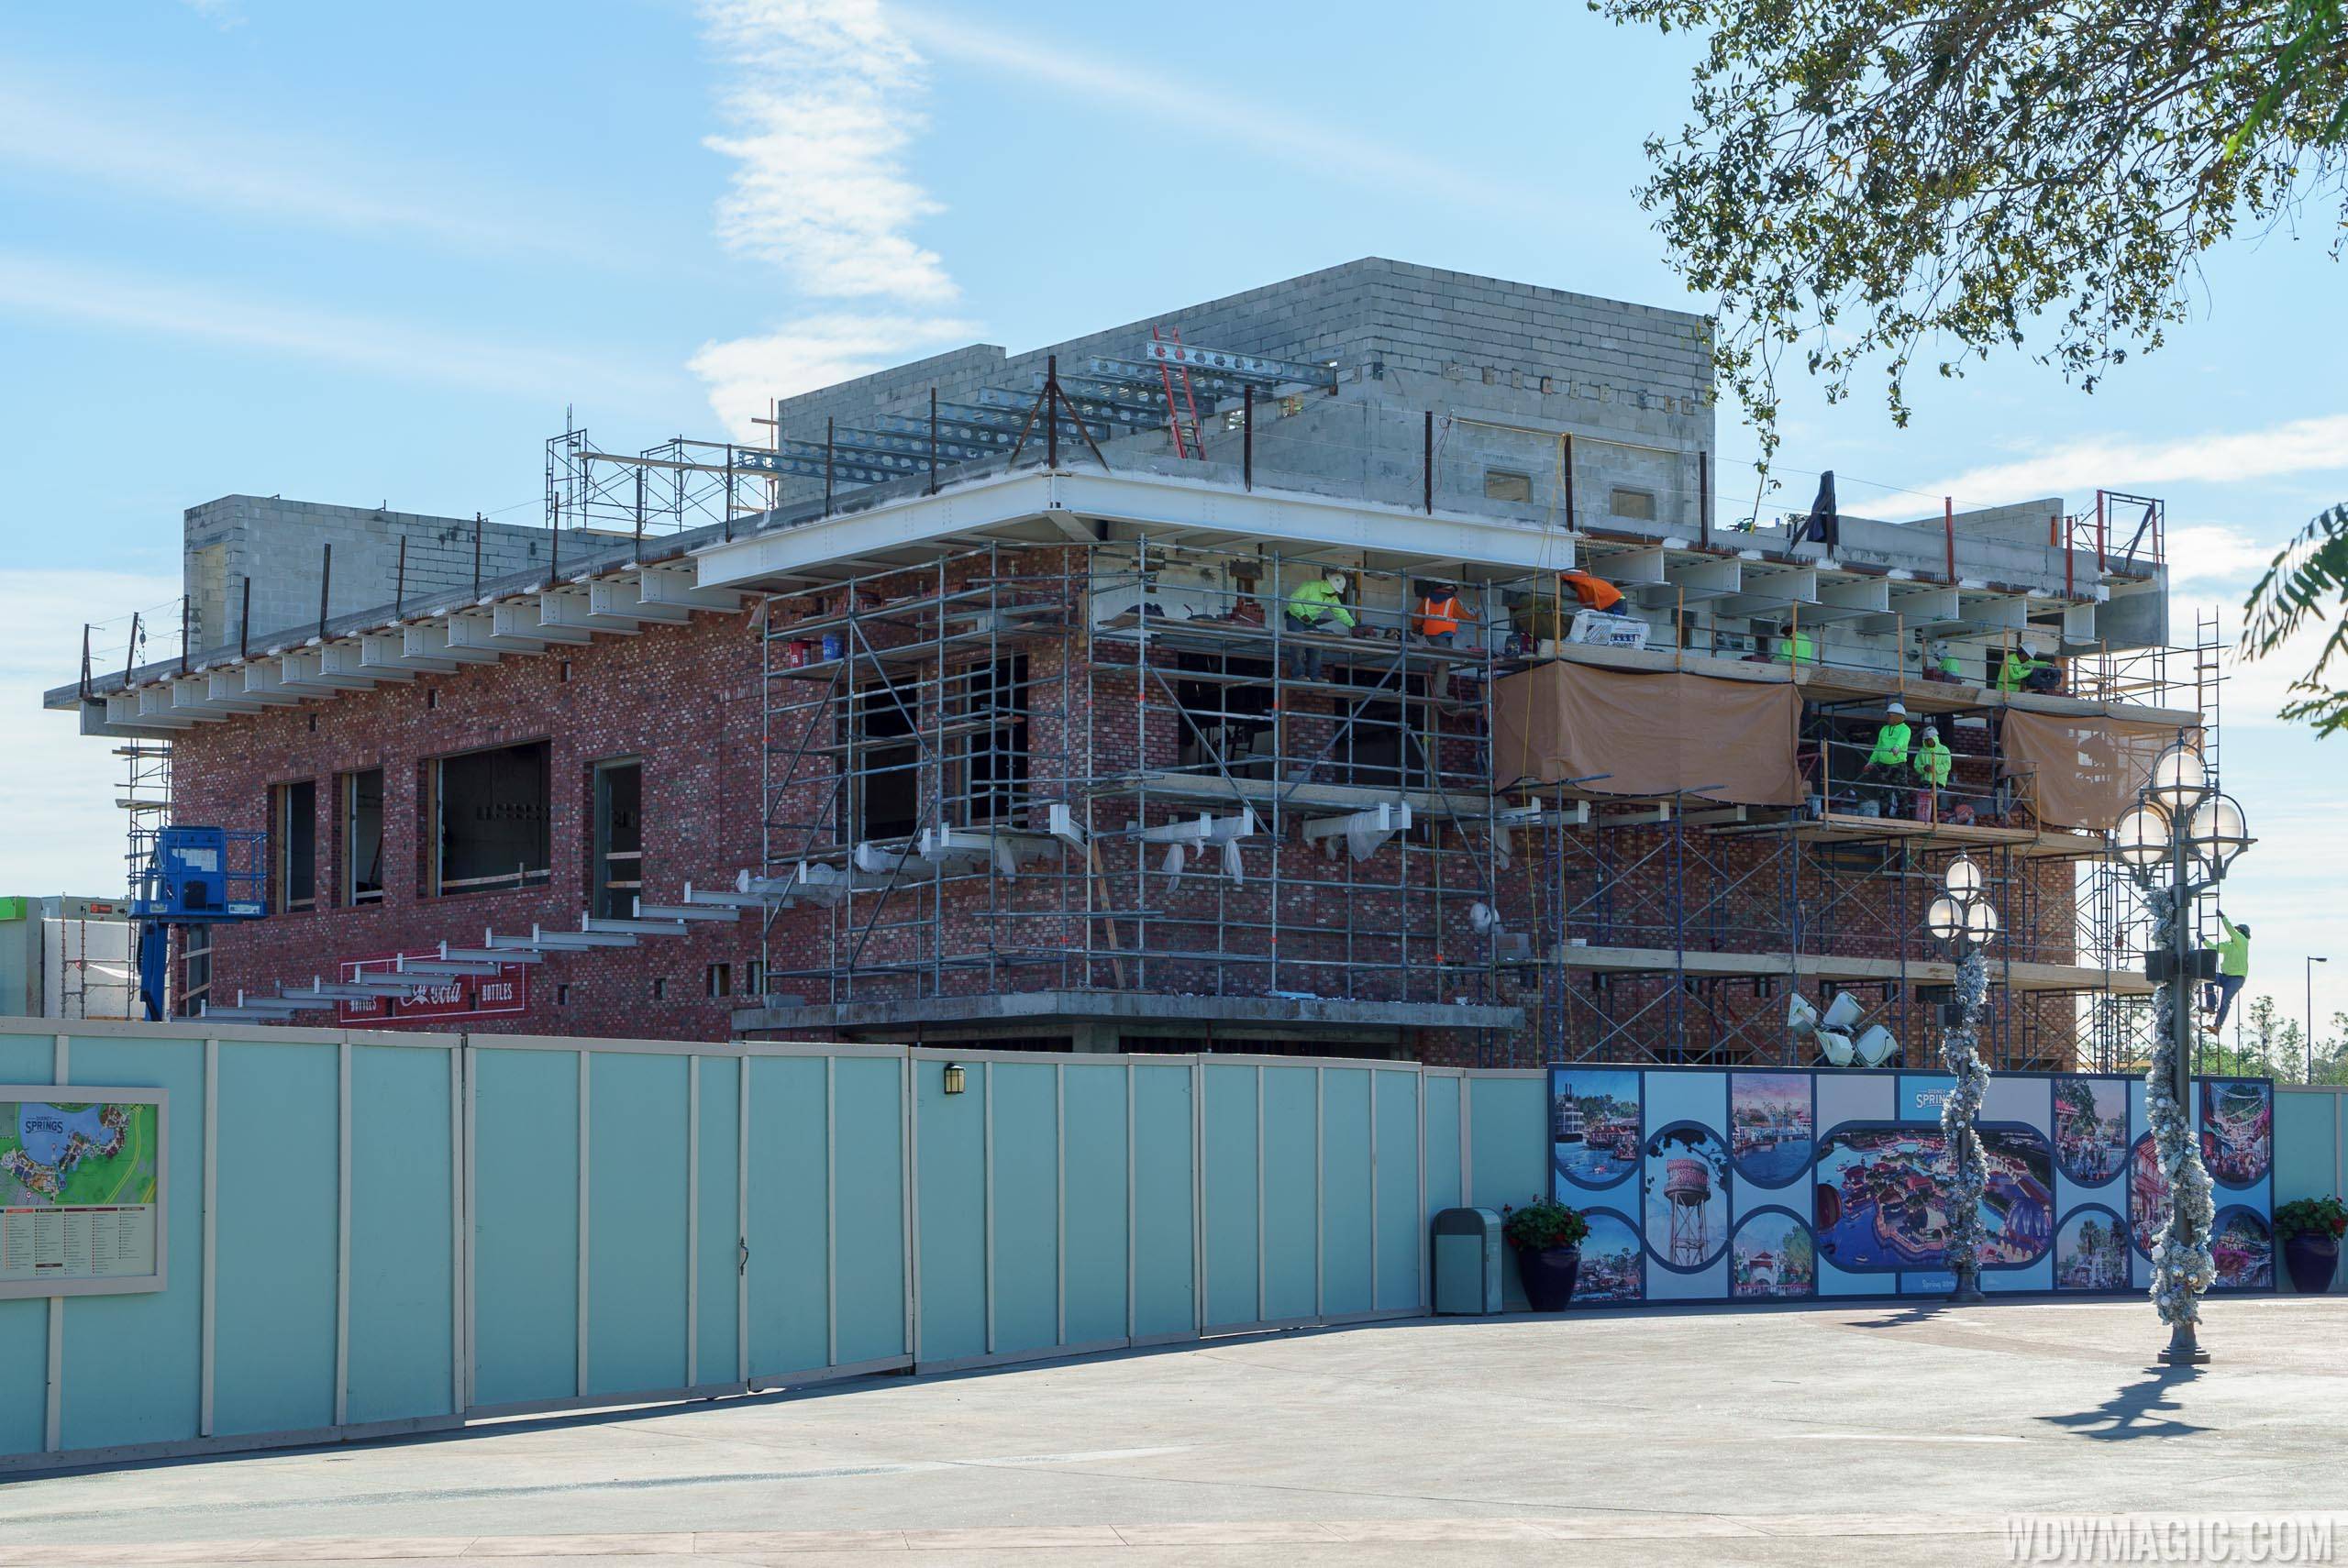 PHOTOS - World of Coca-Cola experience under construction at Disney Springs